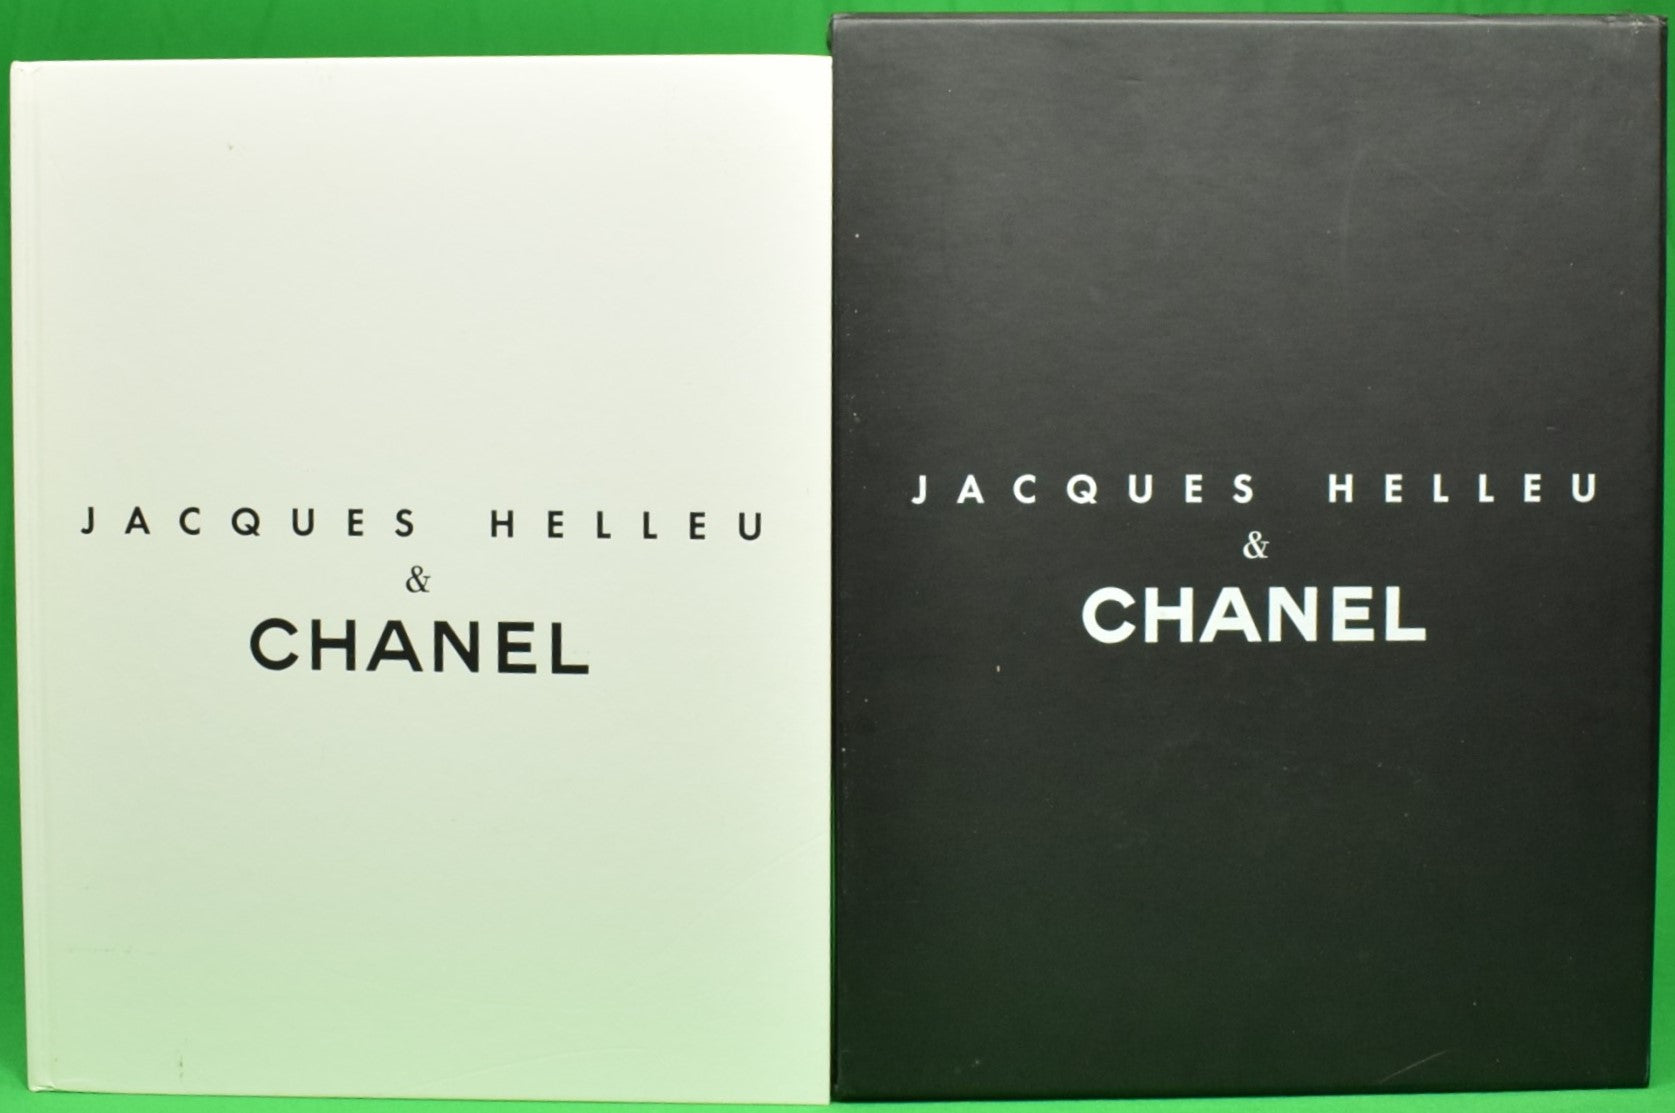  Jacques Helleu & Chanel: 9780810943124: Helleu